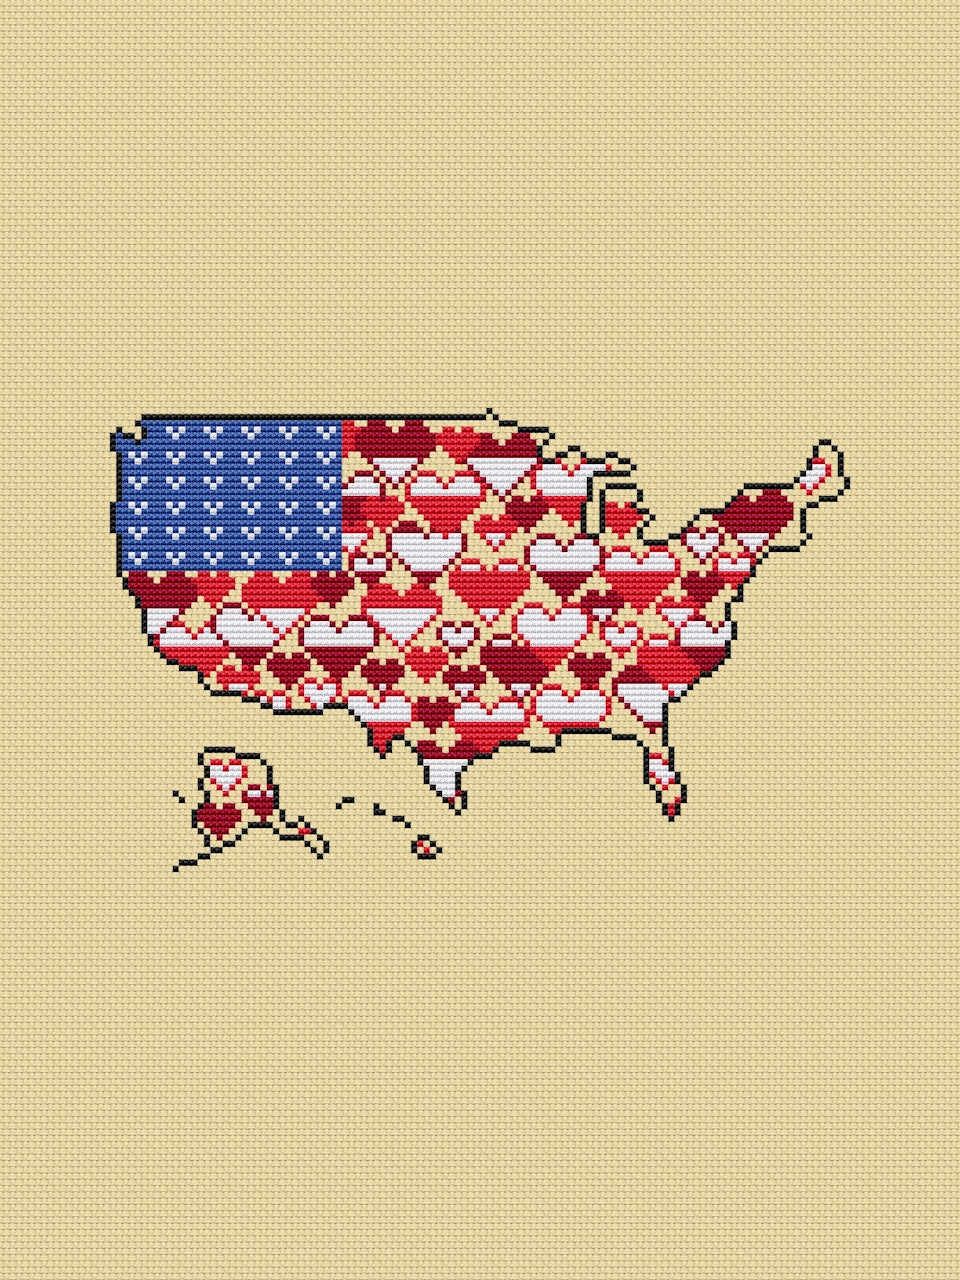 The United States of America - free cross stitch pattern